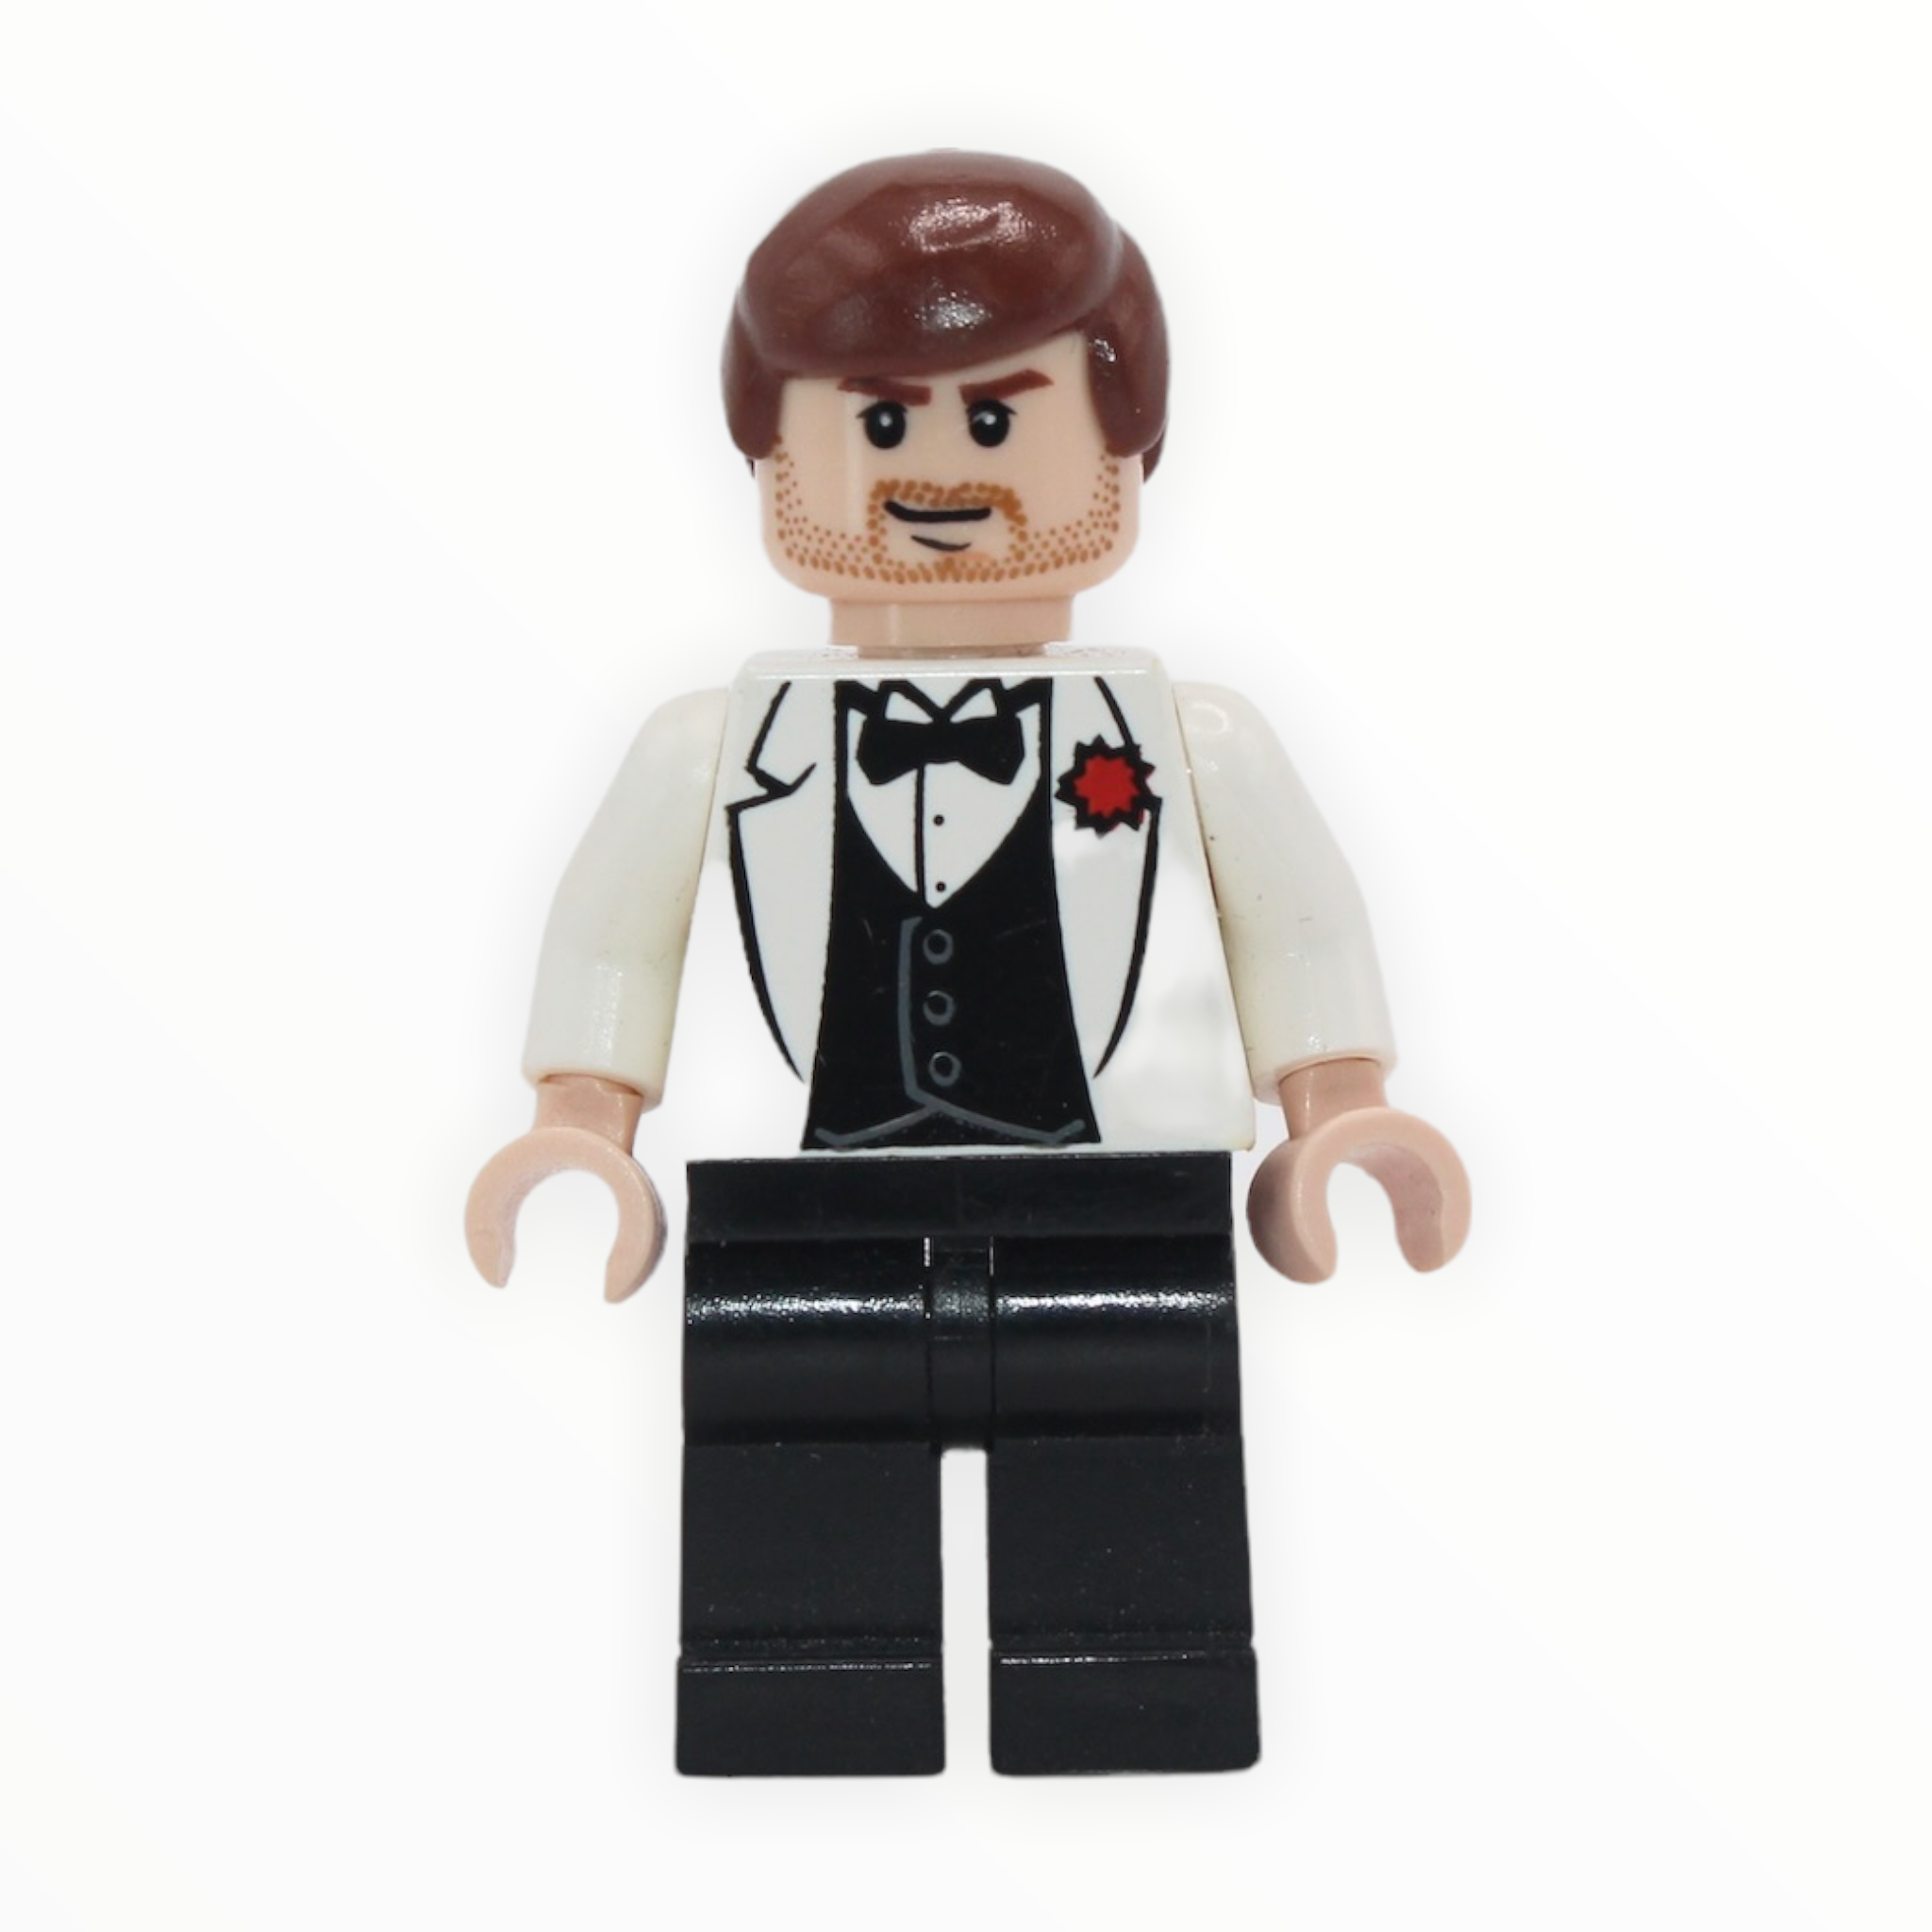 Indiana Jones (white tuxedo, hair)